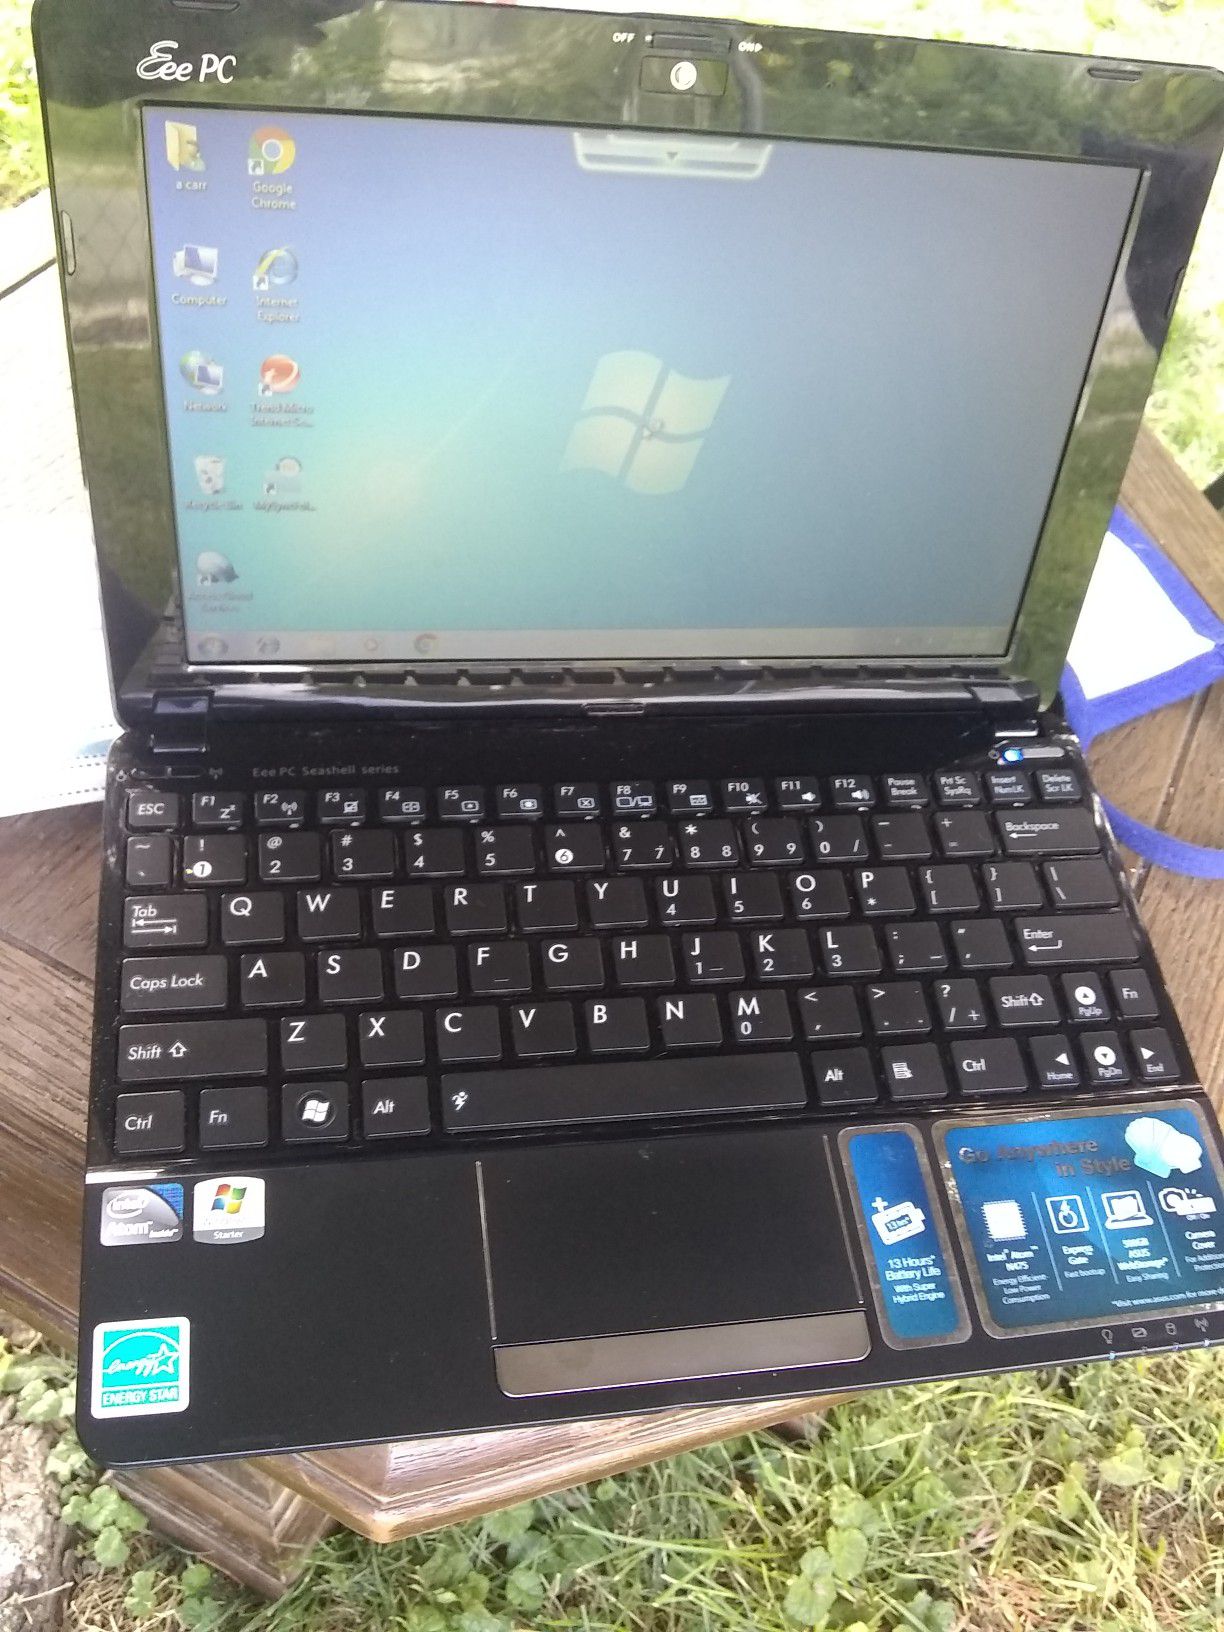 Asus 10" mini laptop